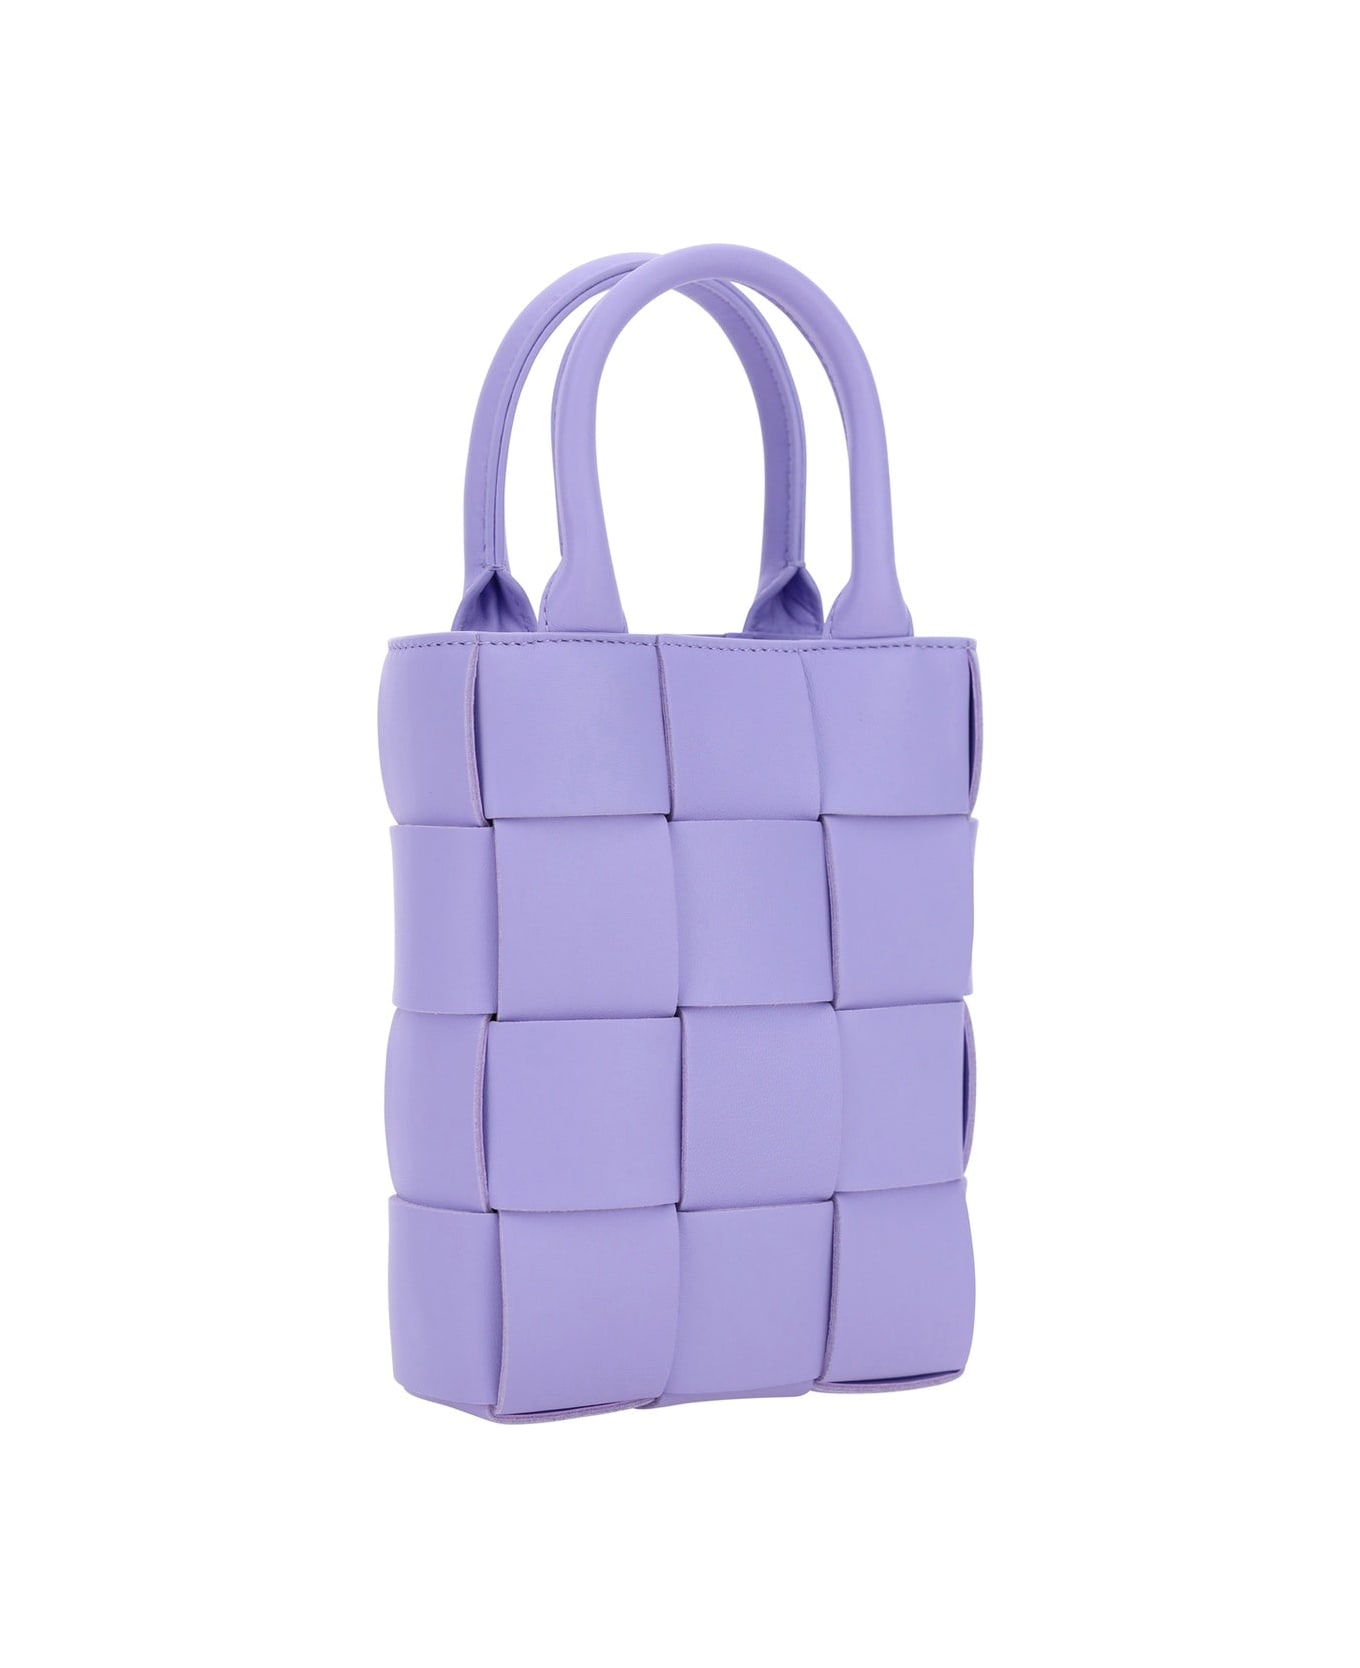 Bottega Veneta Cassette Mini Handbag - Lilac